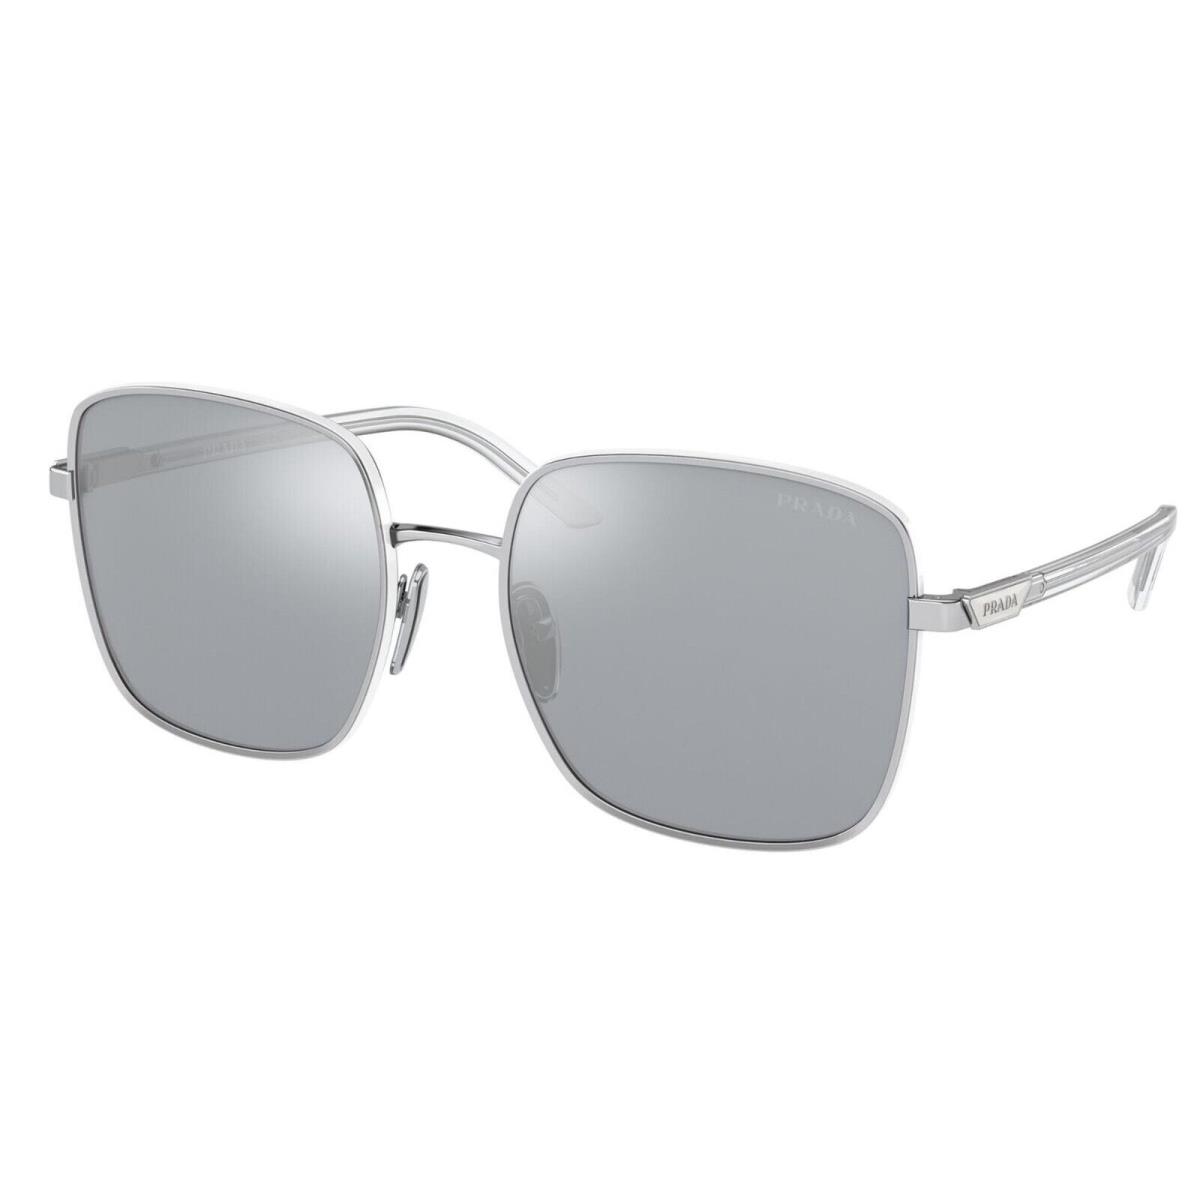 Prada PR 55YS Silver/light Blue Silver Mirrored 1BC02R Sunglasses